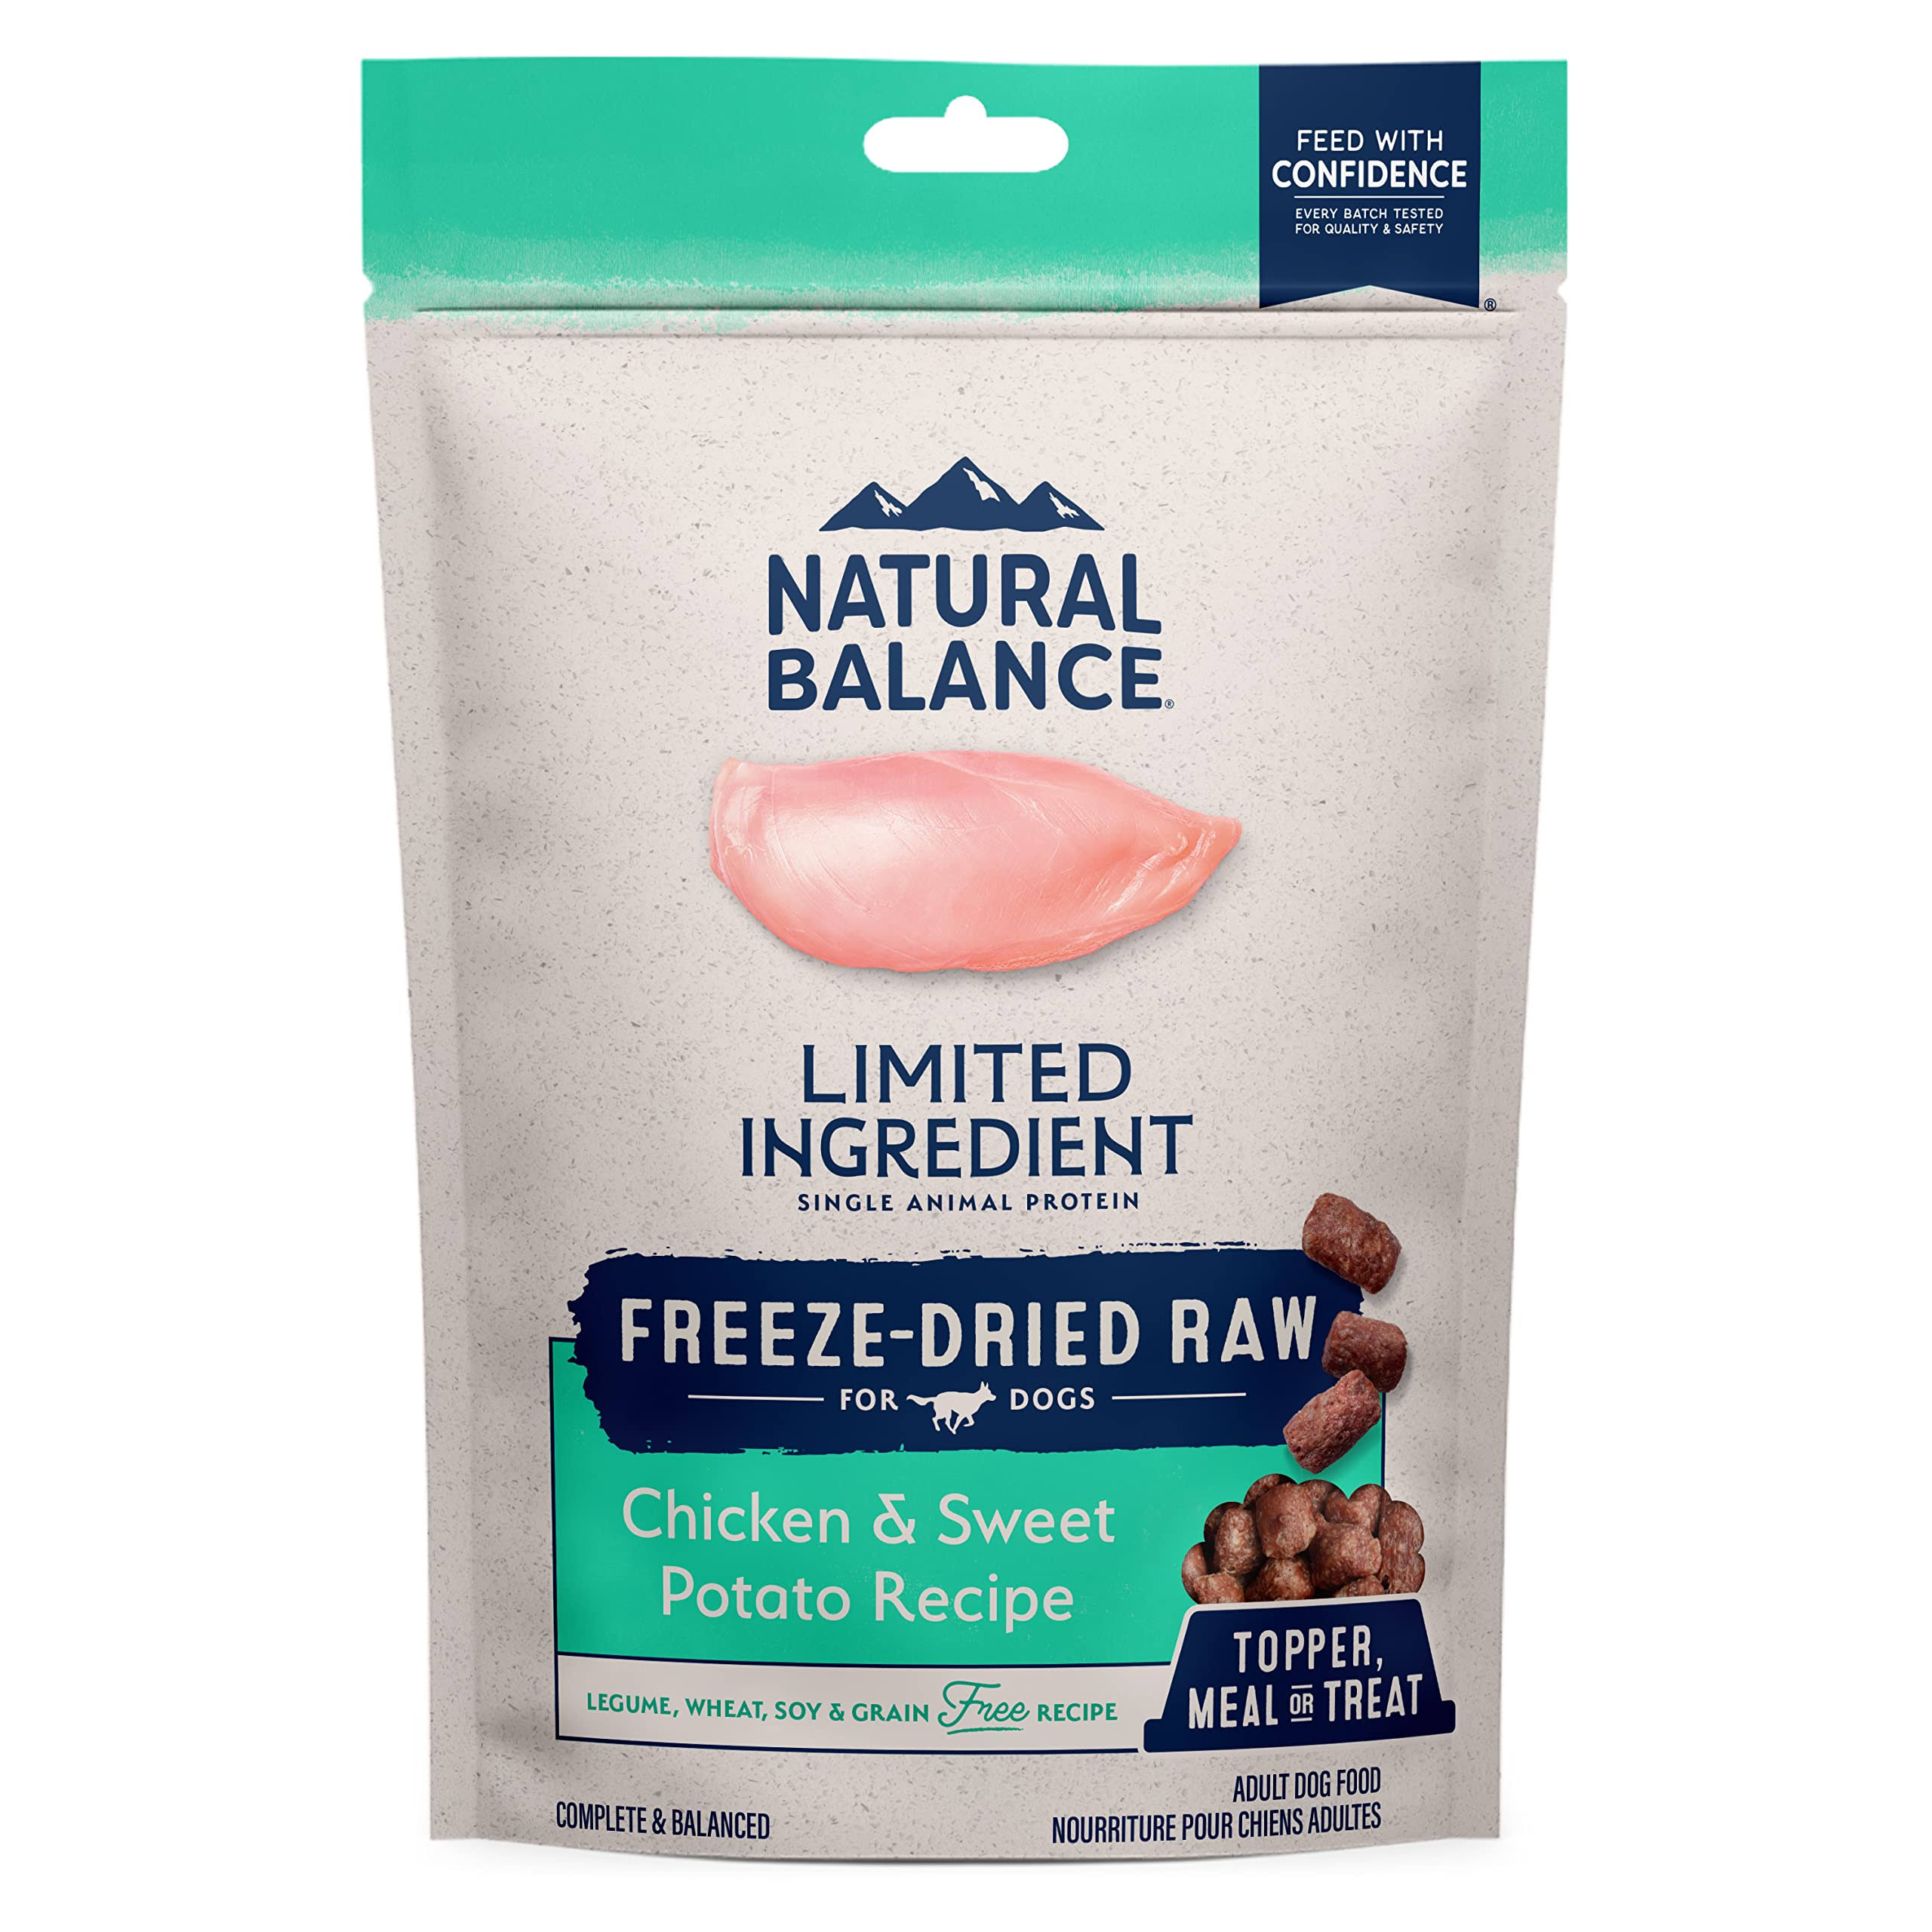 Natural Balance Limited Ingredient Chicken & Sweet Potato Freeze-Dried Raw Dog Food, 13-oz